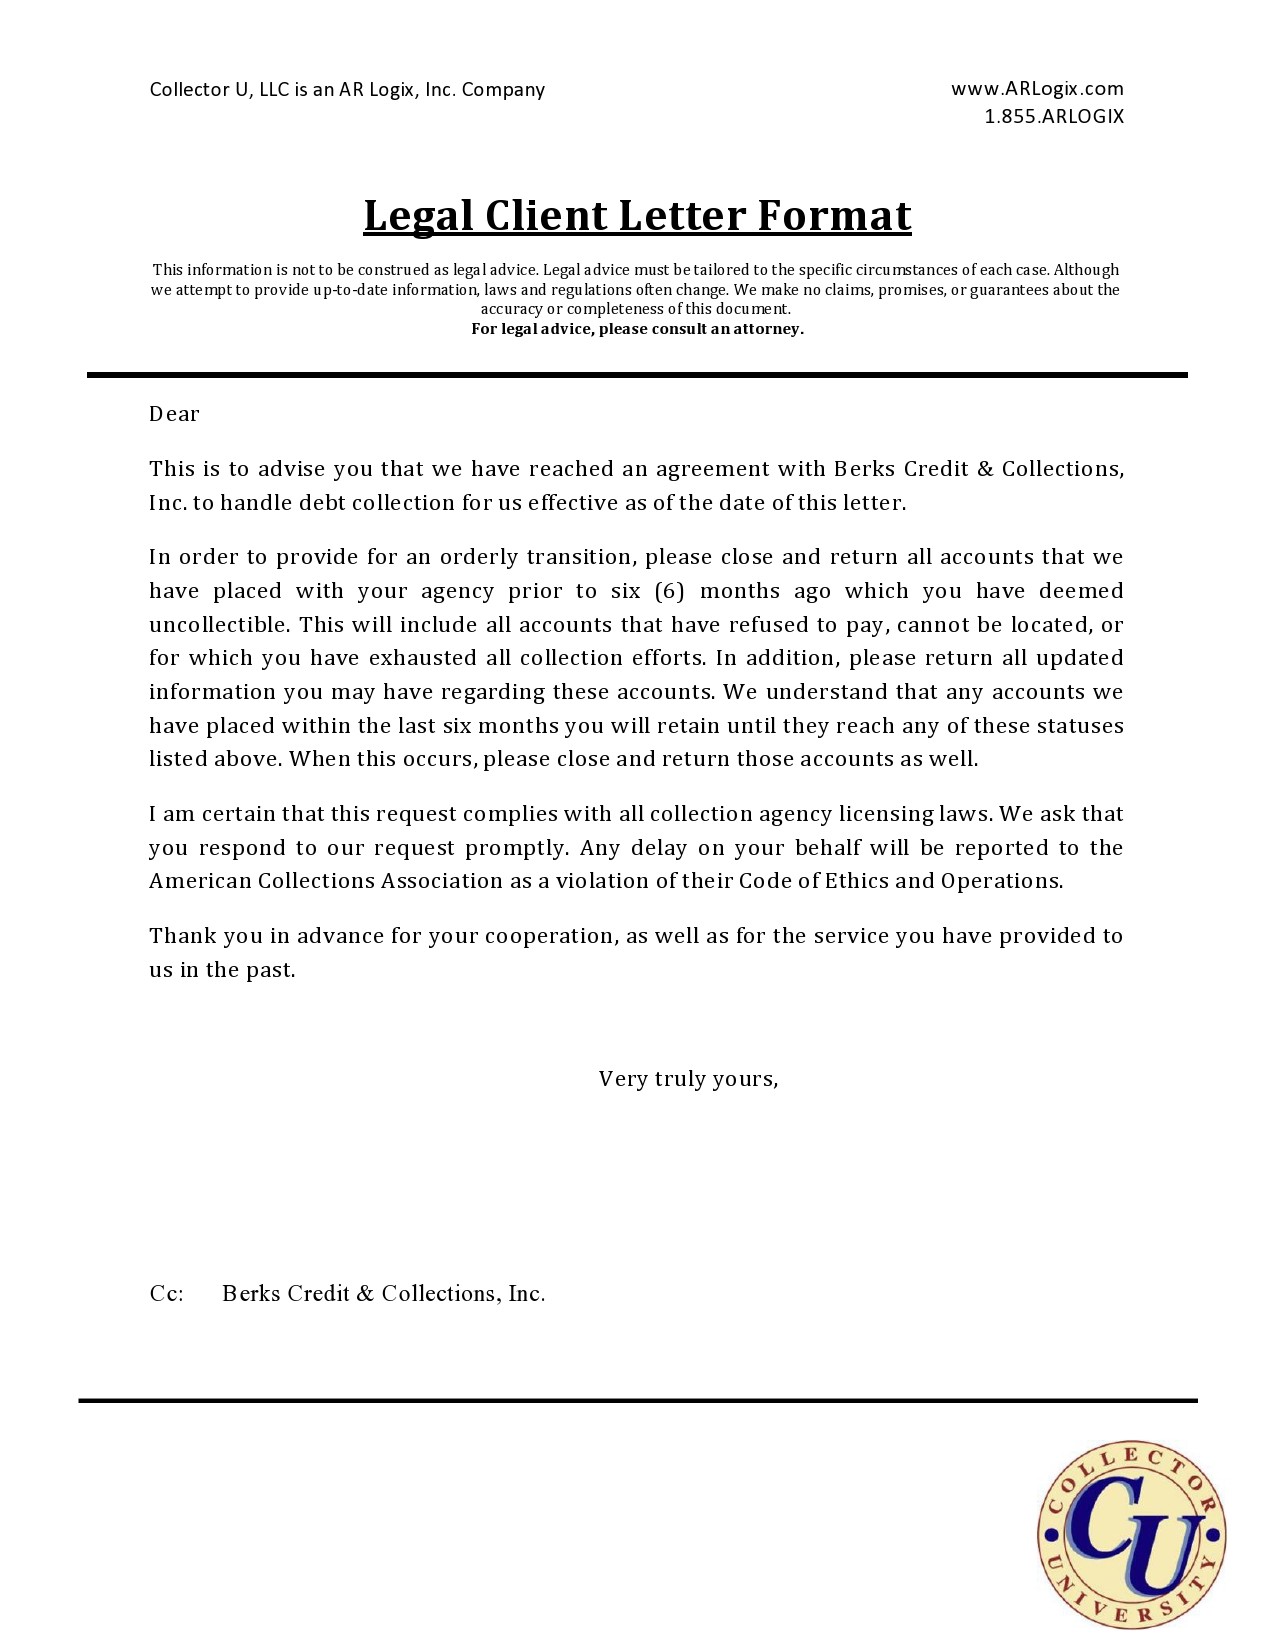 47 Professional Legal Letter Formats (& Templates) ᐅ TemplateLab